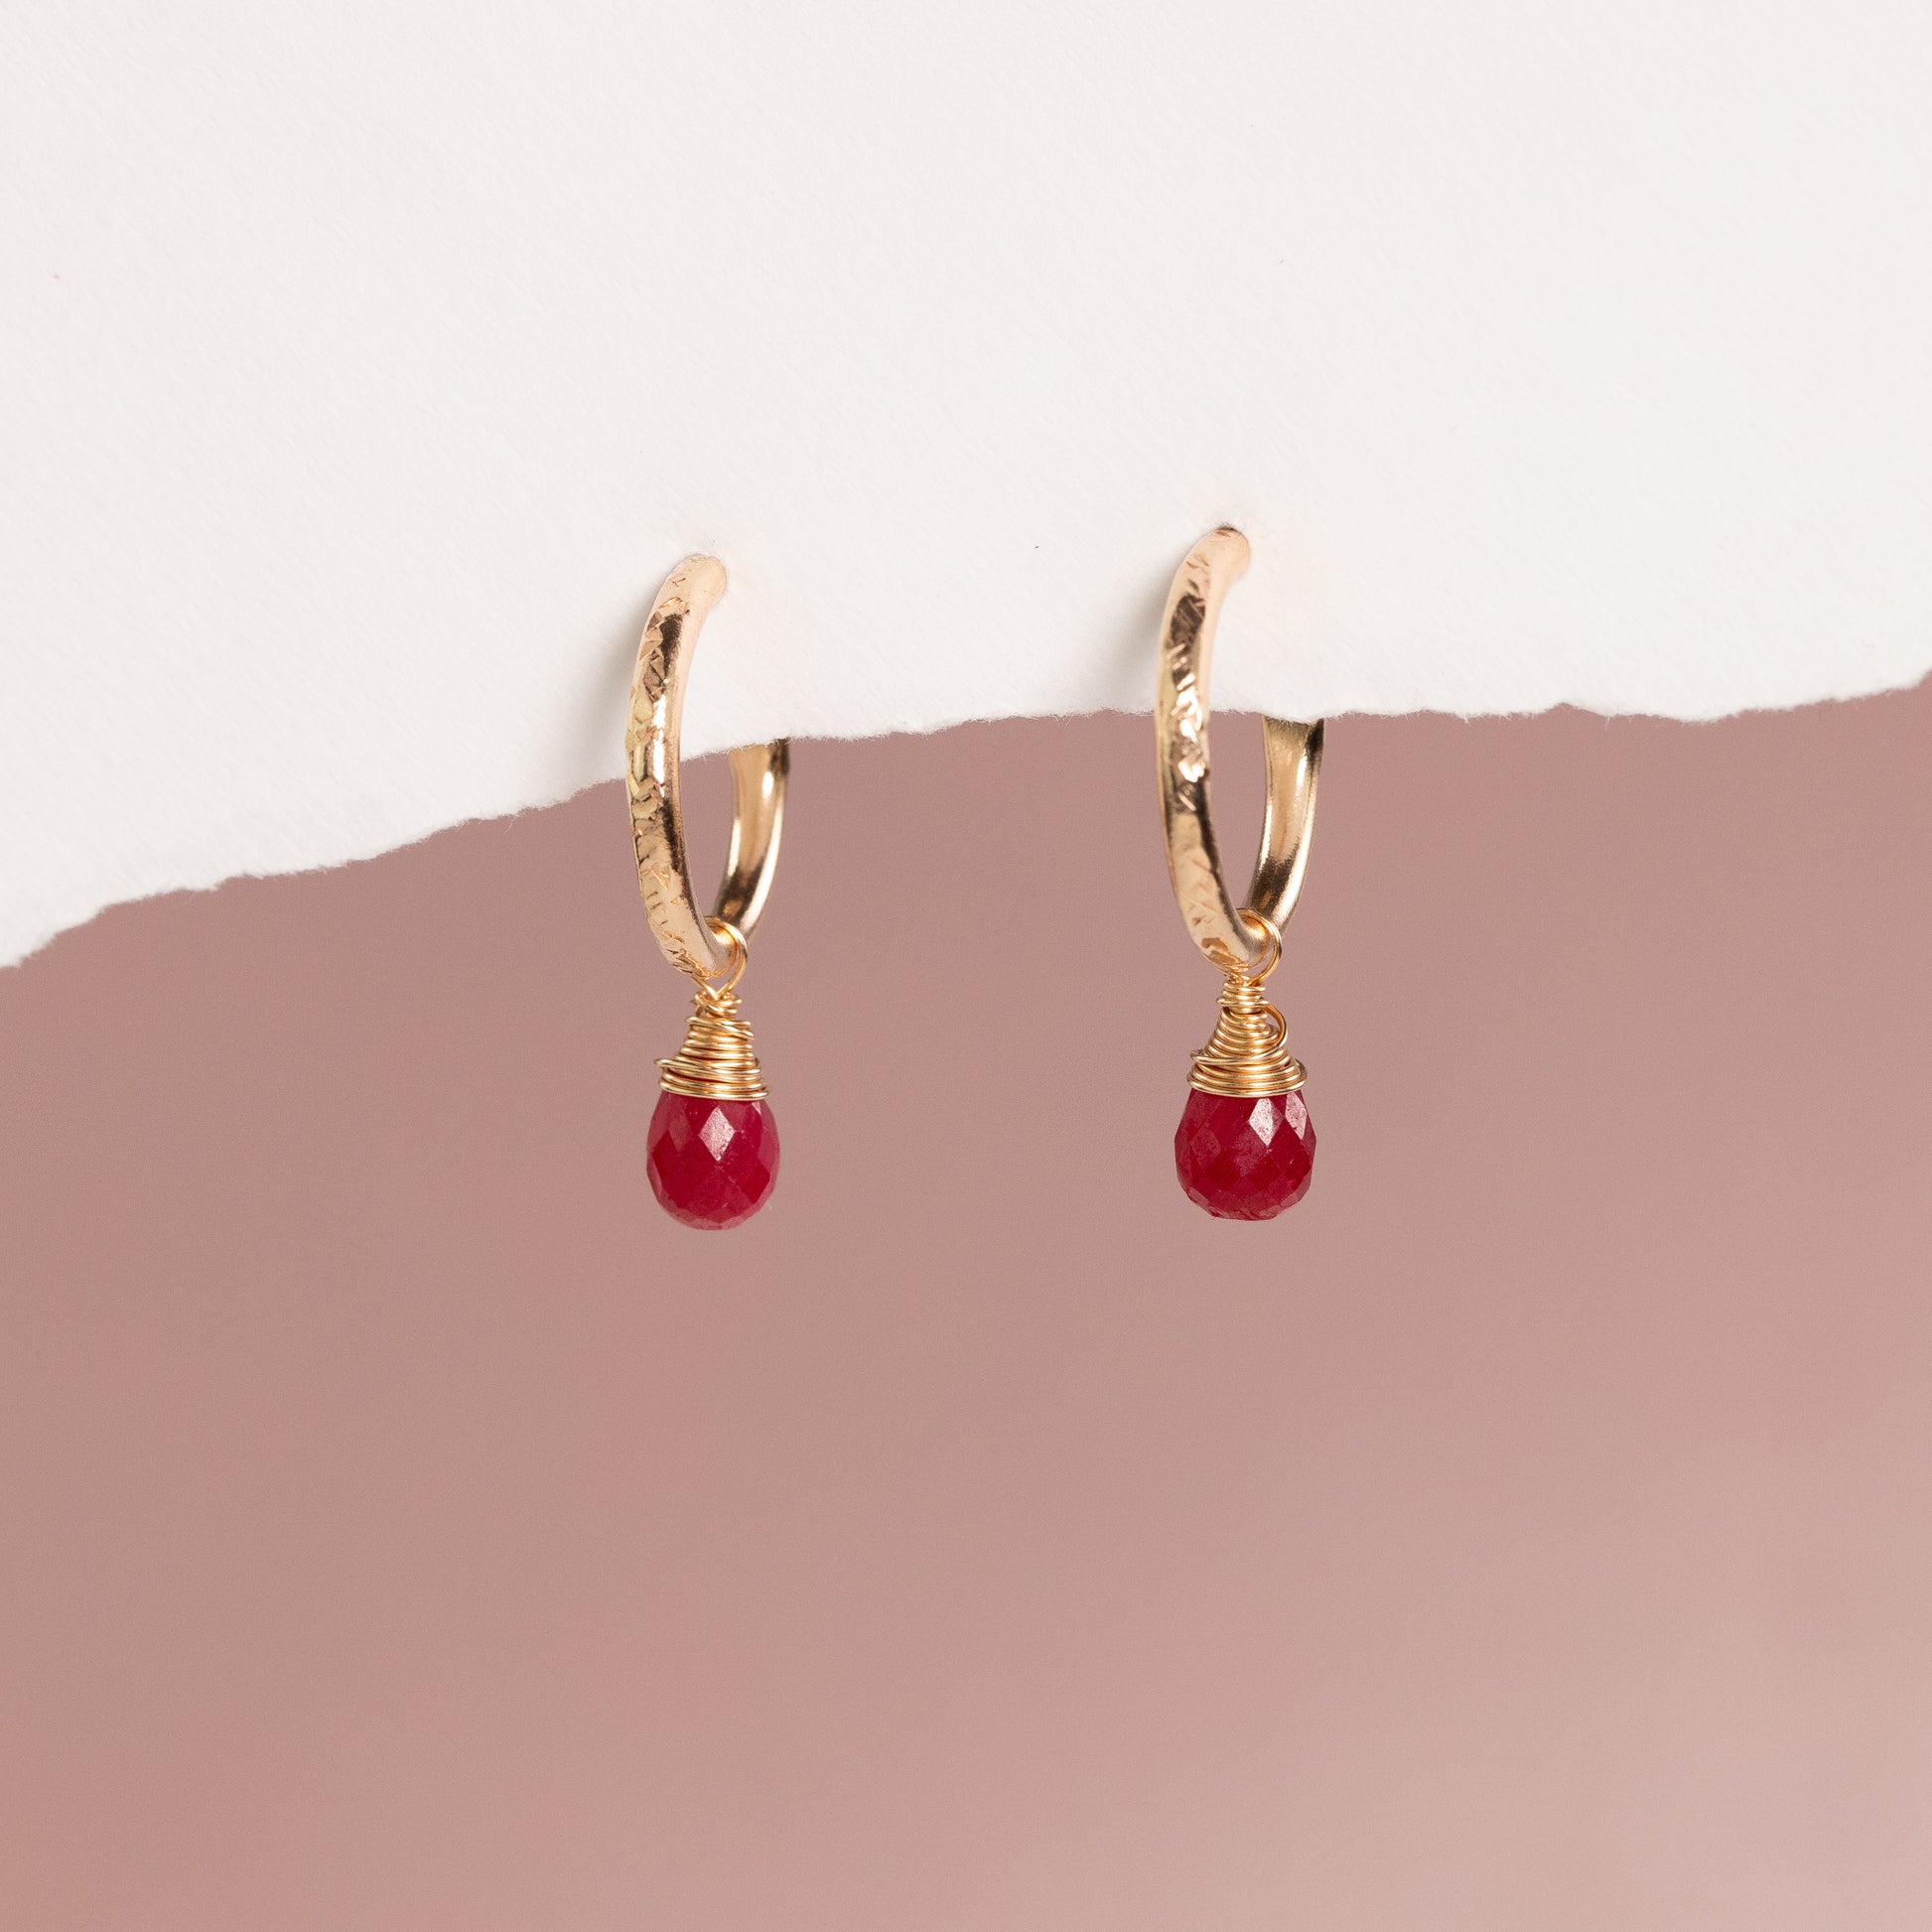 July Birthstone Earrings - Ruby Gold Hoops - 1.5cm